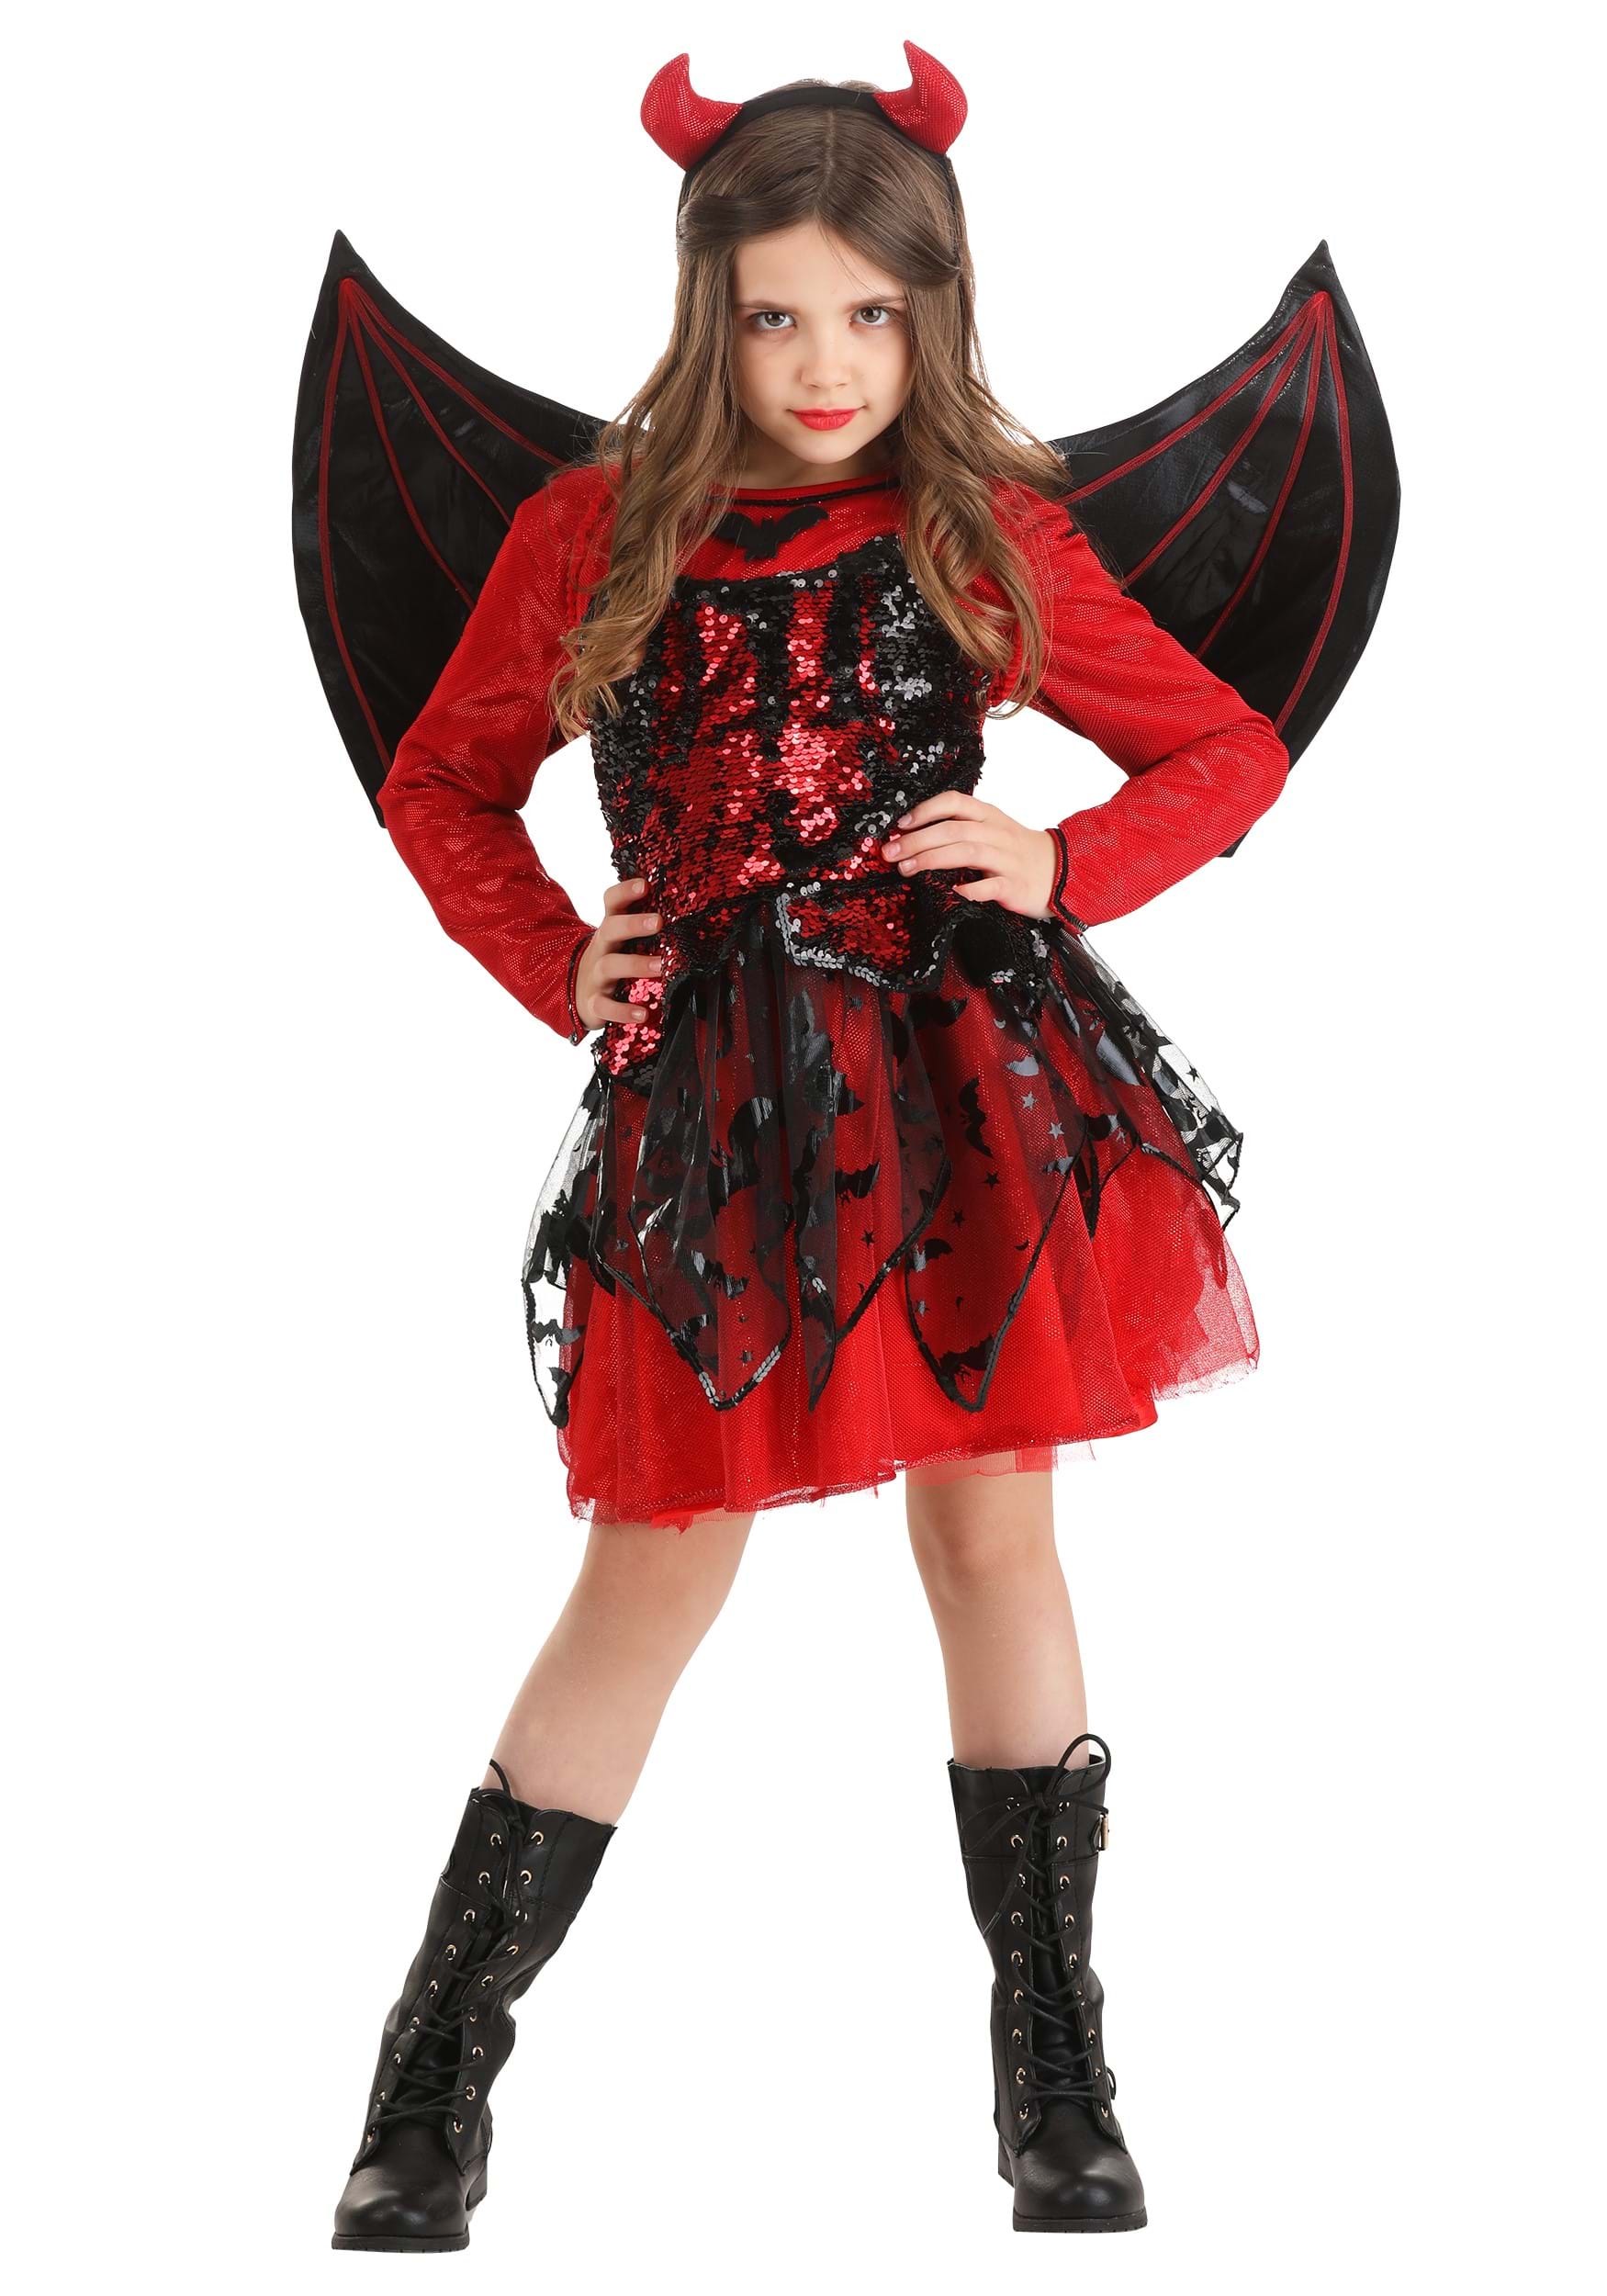 Photos - Fancy Dress Winsun Dress FUN Costumes Sparkling Girl's Devil Dress Costume Black/Red FUN2775CH 